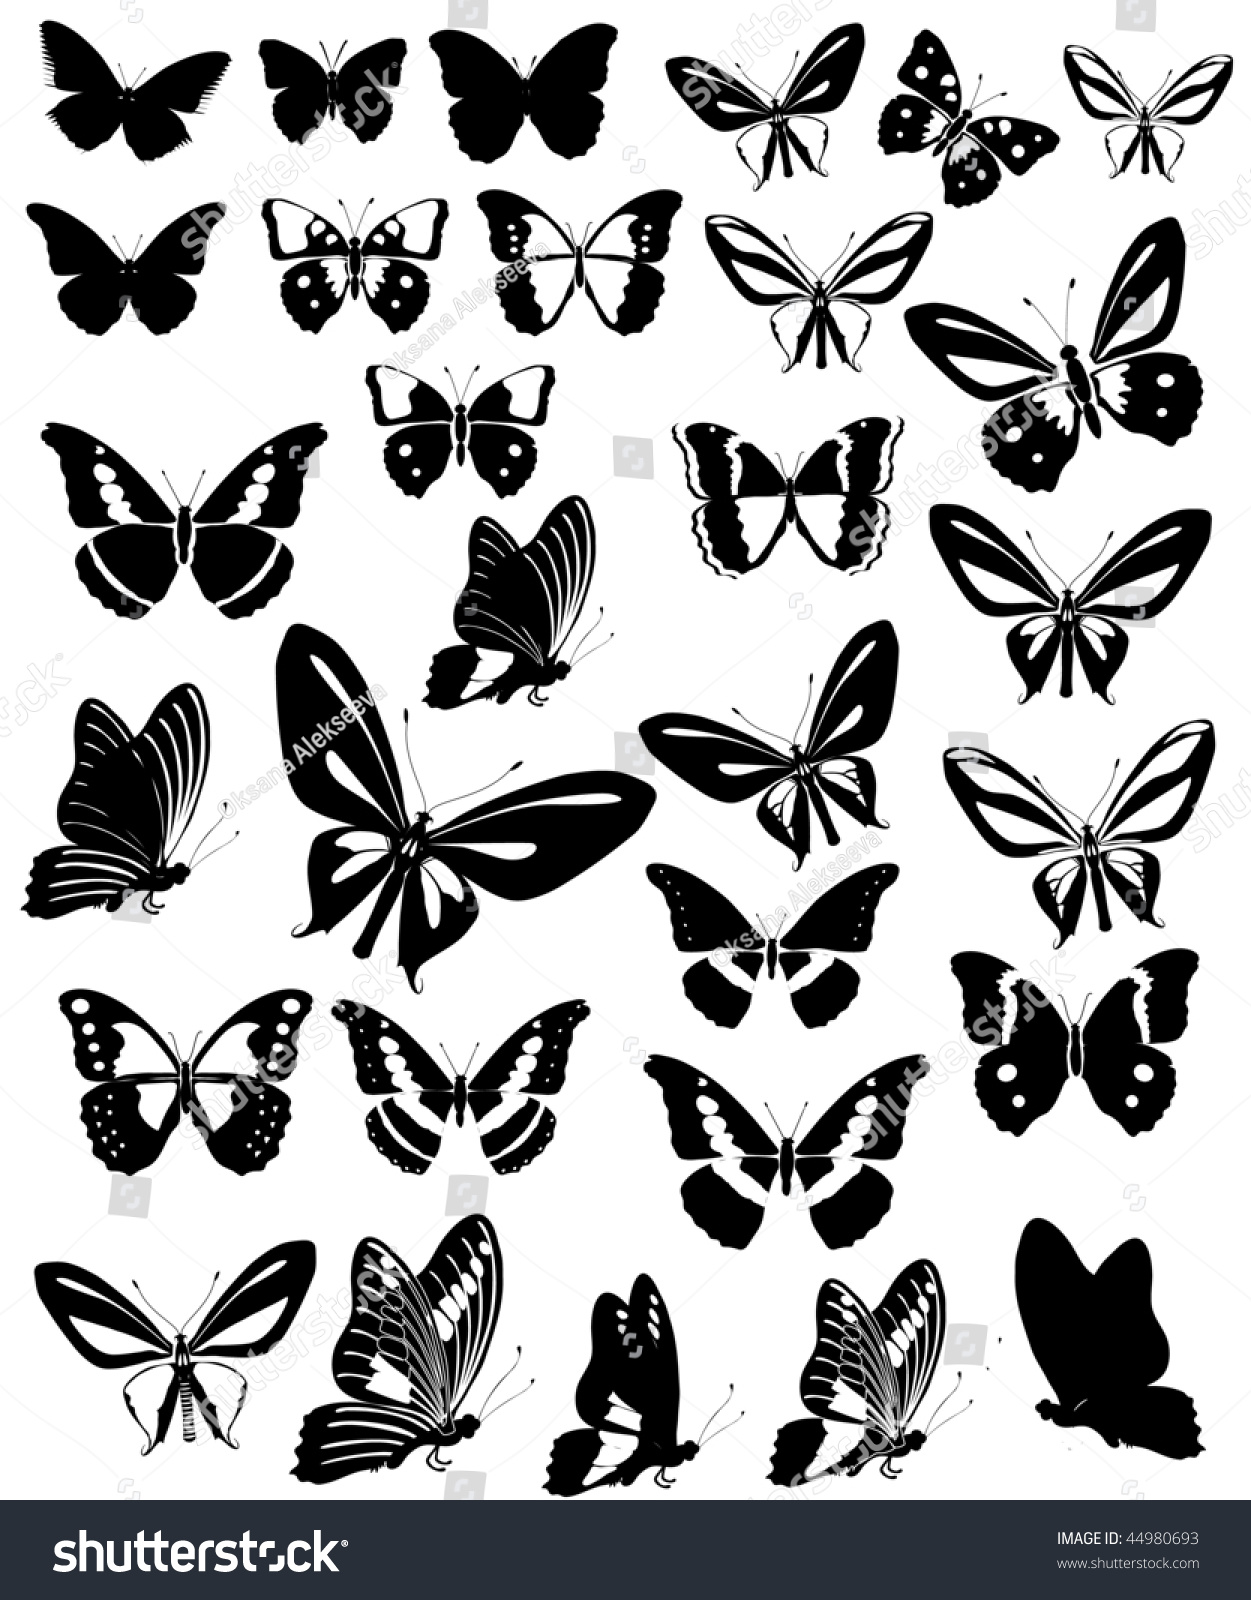 Butterflies Party Stock Vector Illustration 44980693 : Shutterstock